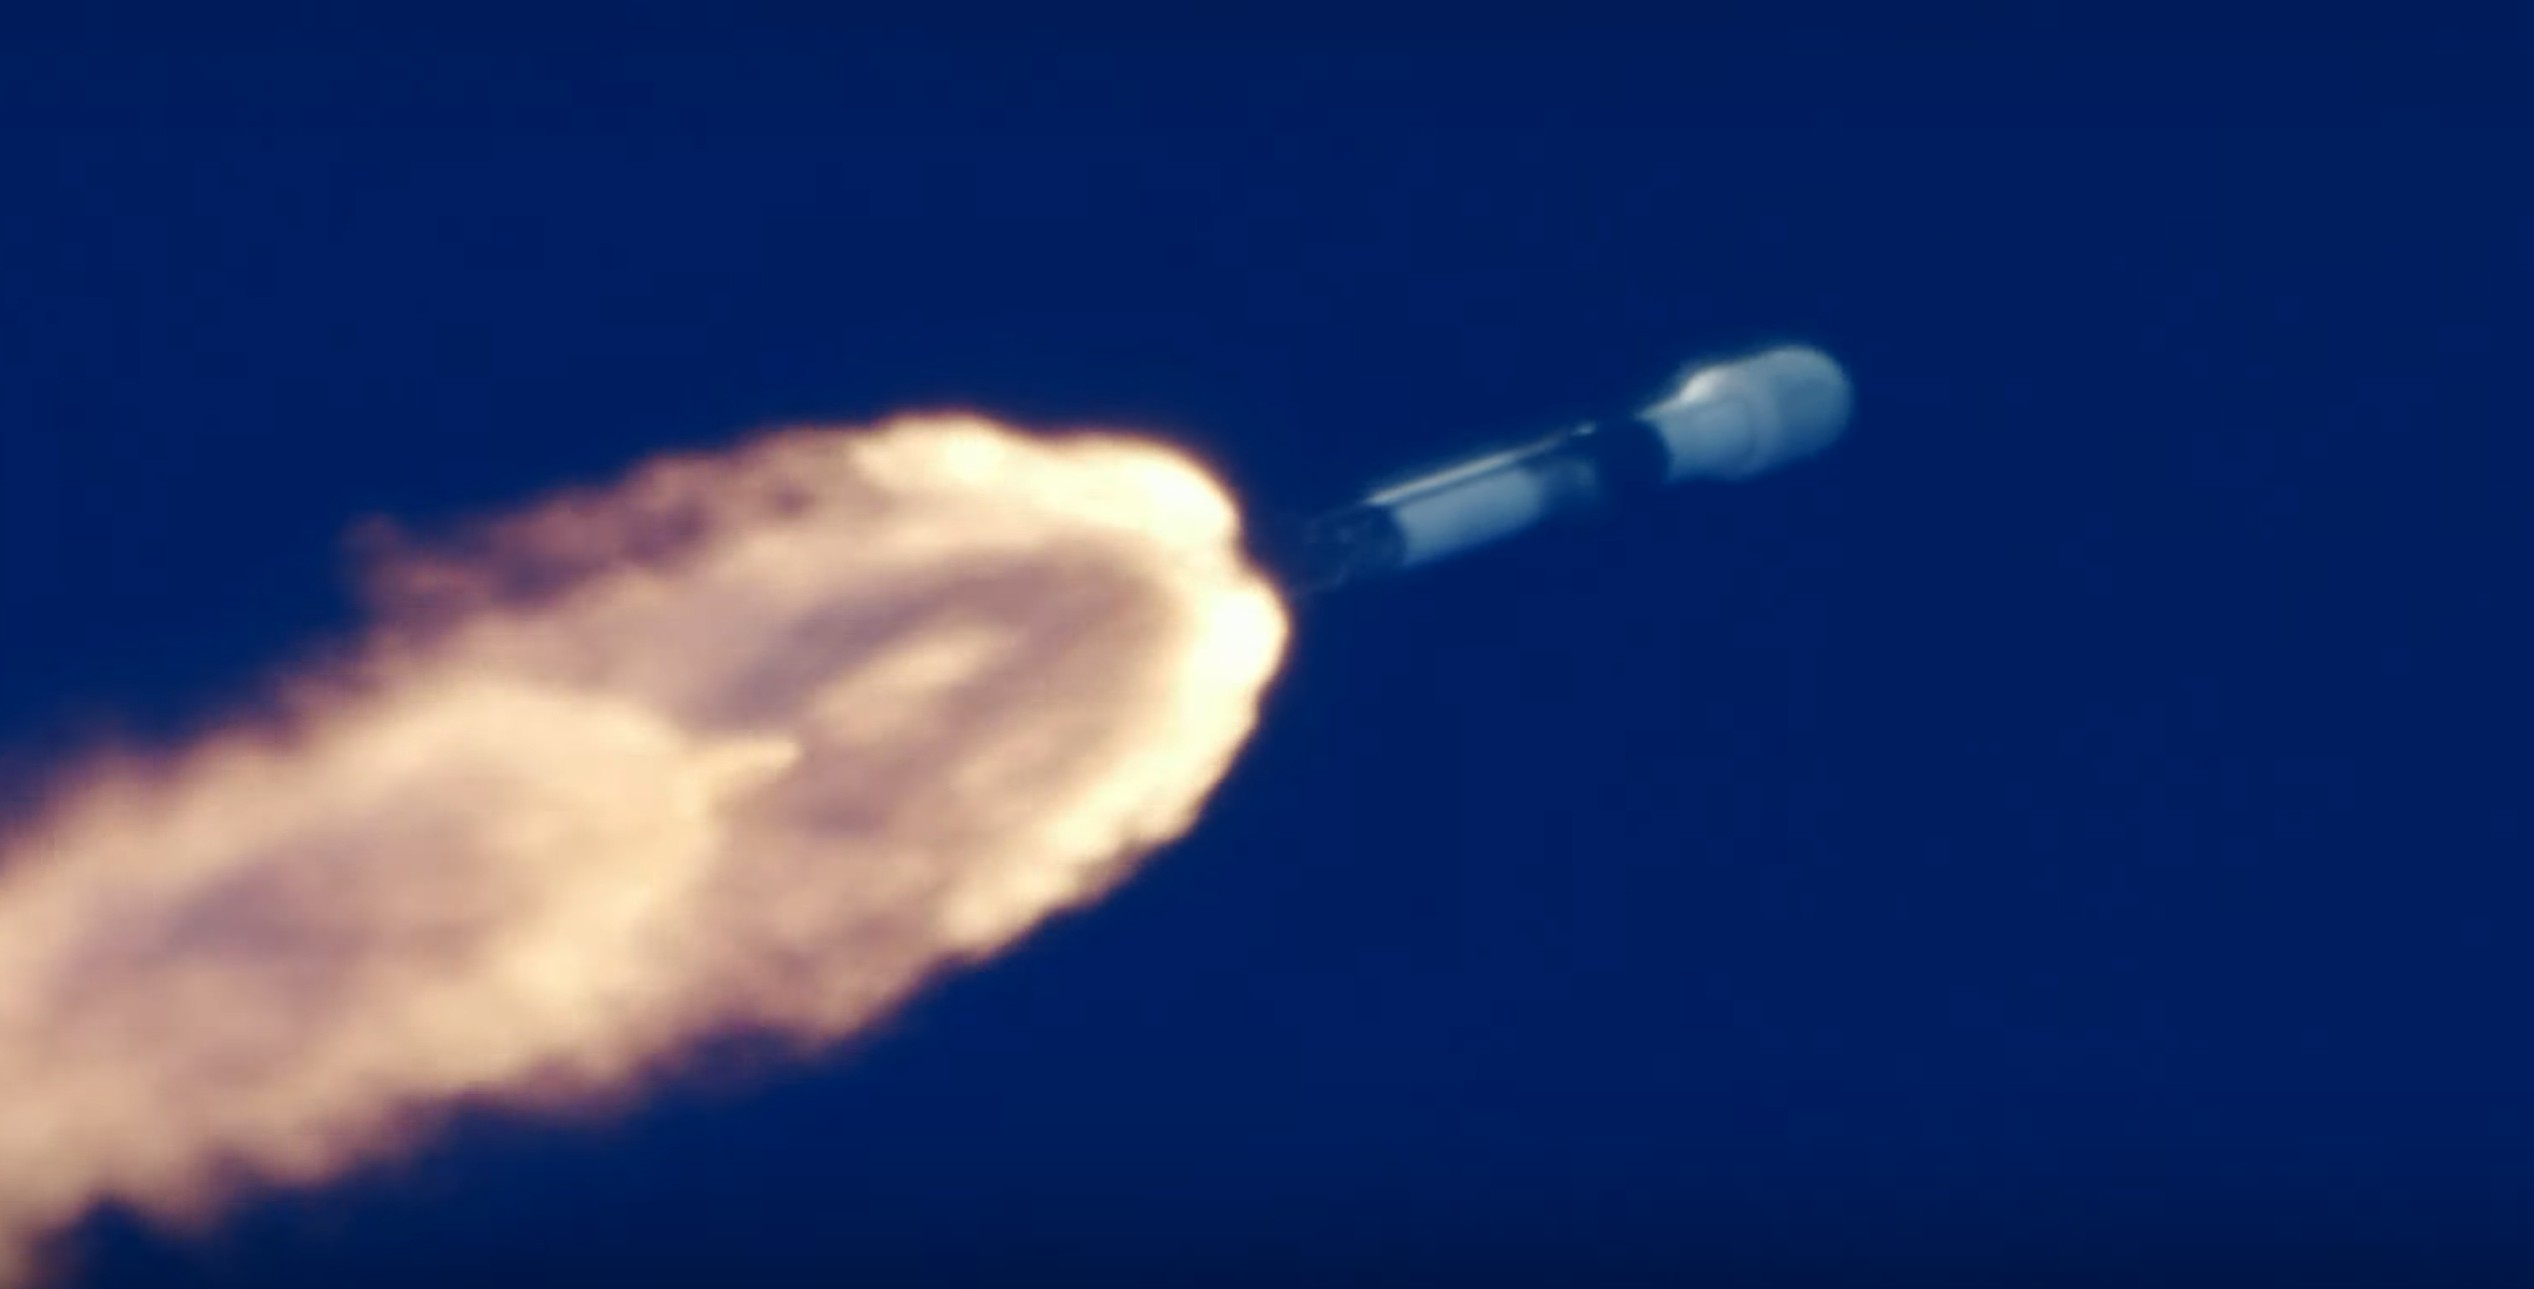 Starlink 3-1 F9 B1063 SLC-4E webcast (SpaceX) launch 3 crop